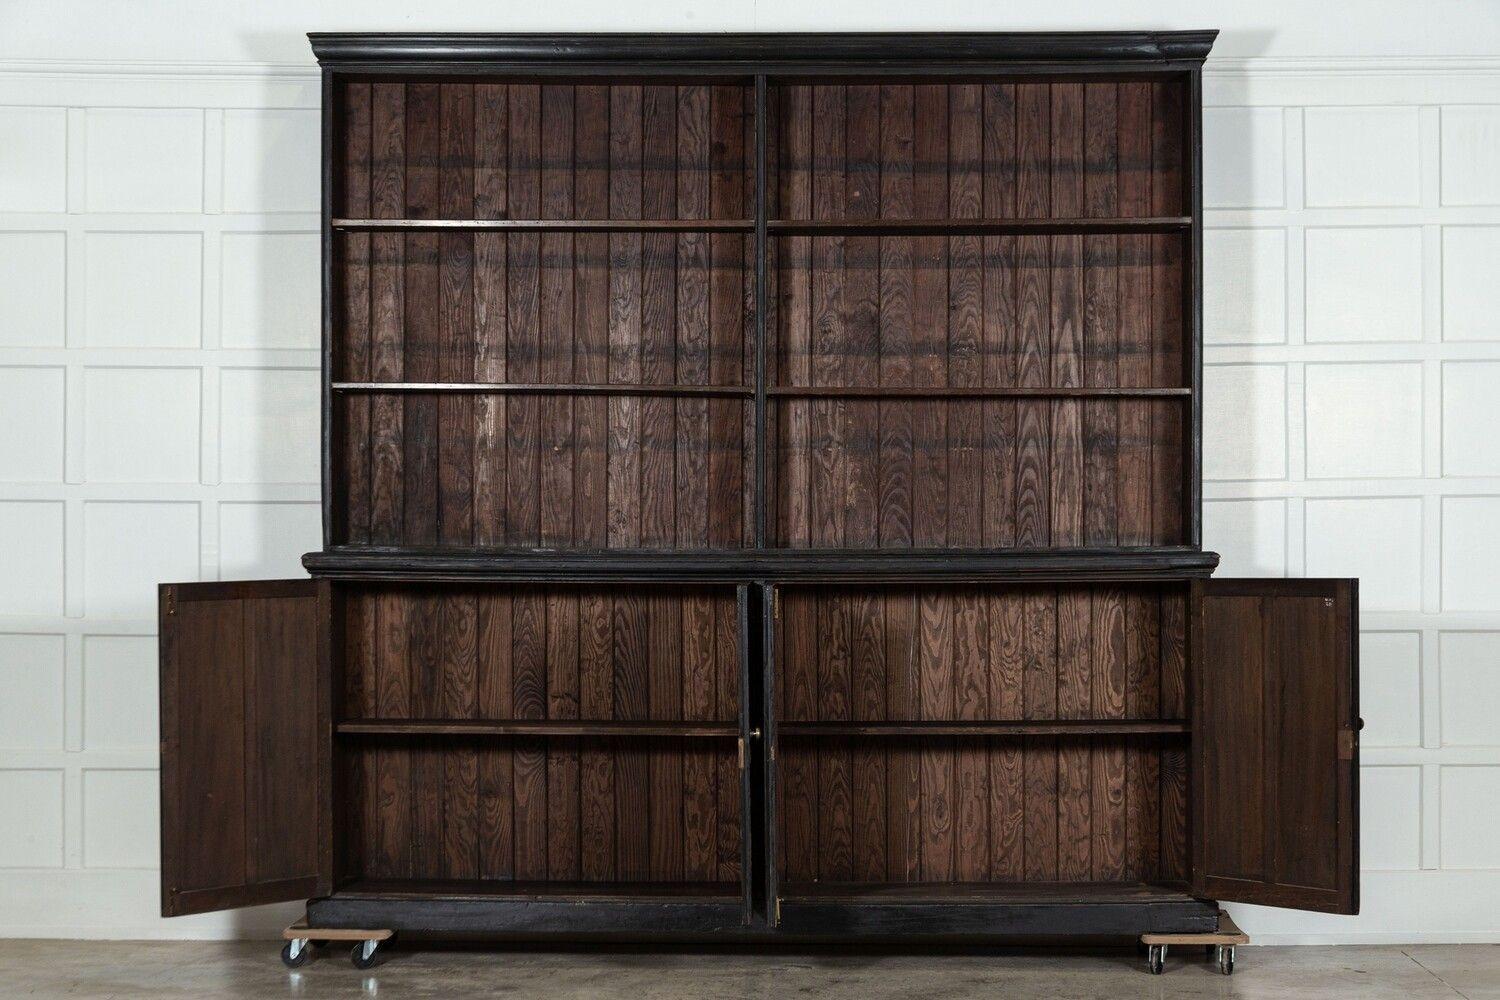 circa 1920
Monumental English Ebonised Beech Bookcase Cabinet
sku 1651
Base W260 x D47 x H108 cm
Top W263 x D30 x H149 cm
Together W263 x D47 x H257 cm